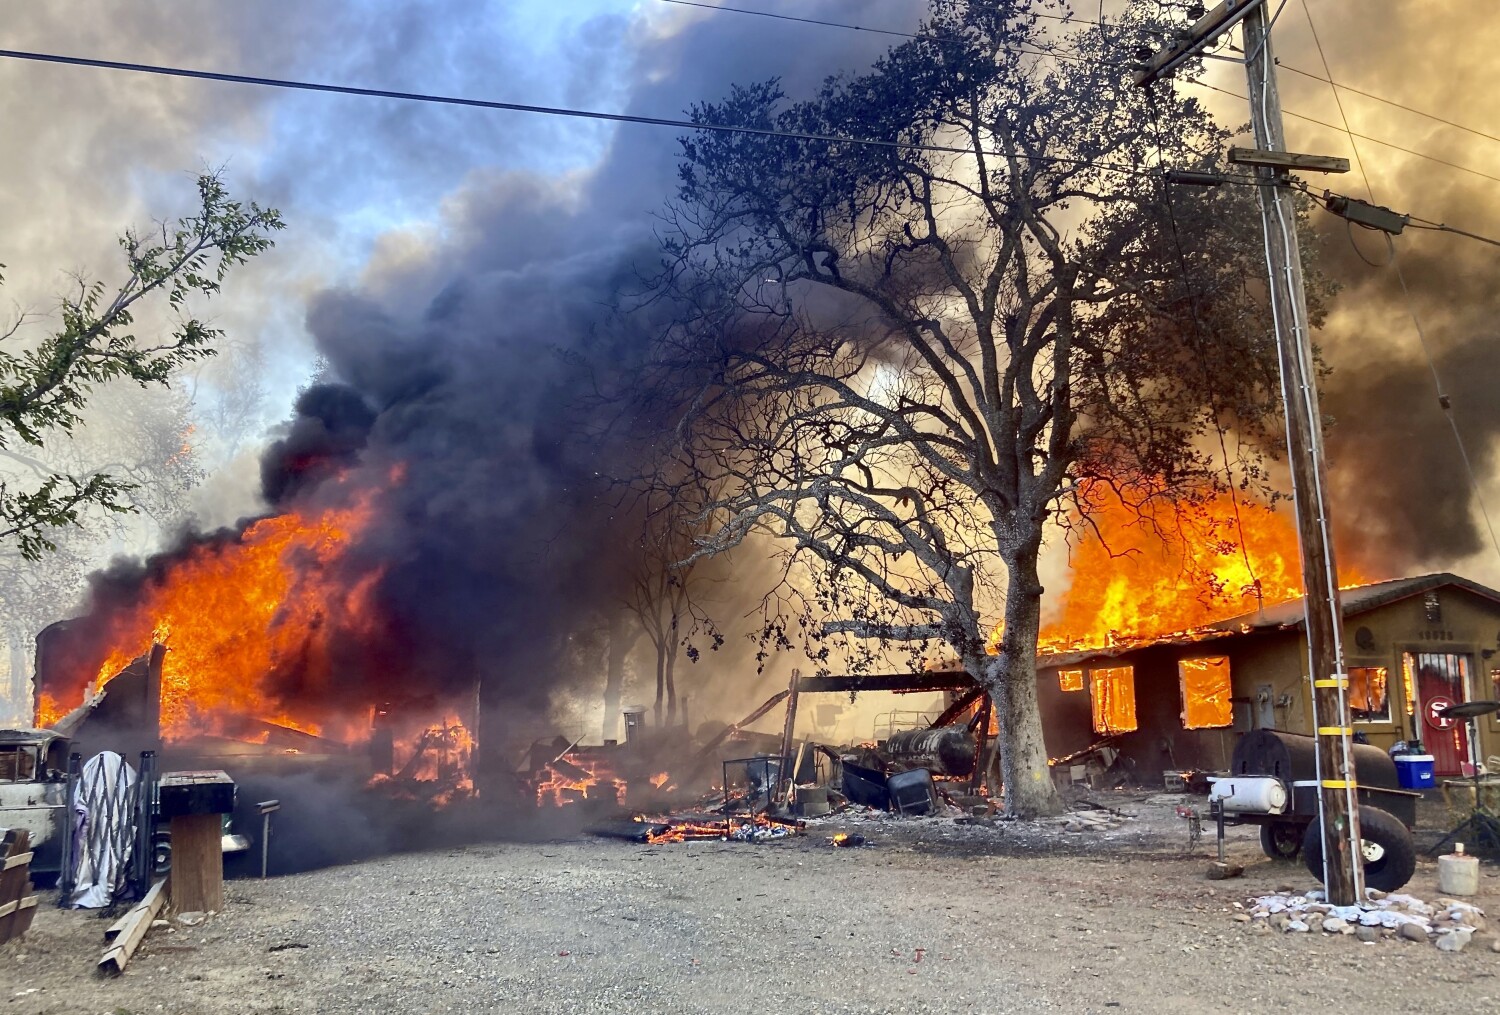 Peter fire destroys homes, damages tortoise sanctuary in Anderson